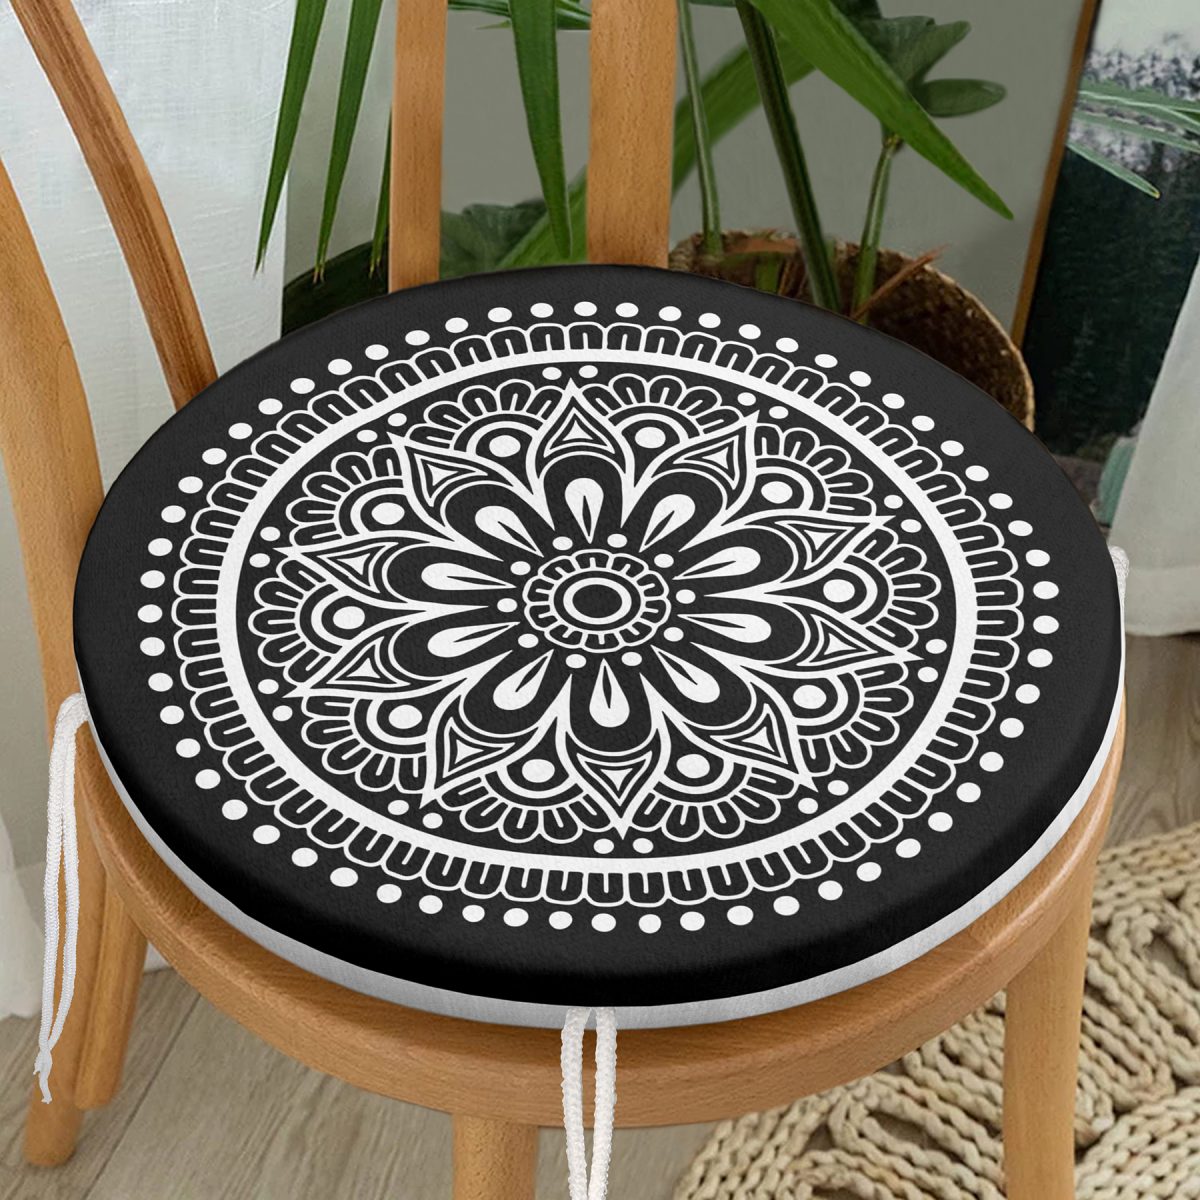 Siyah Beyaz Çiçek Desenli Mandala Motifli Yuvarlak Fermuarlı Sandalye Minderi Realhomes